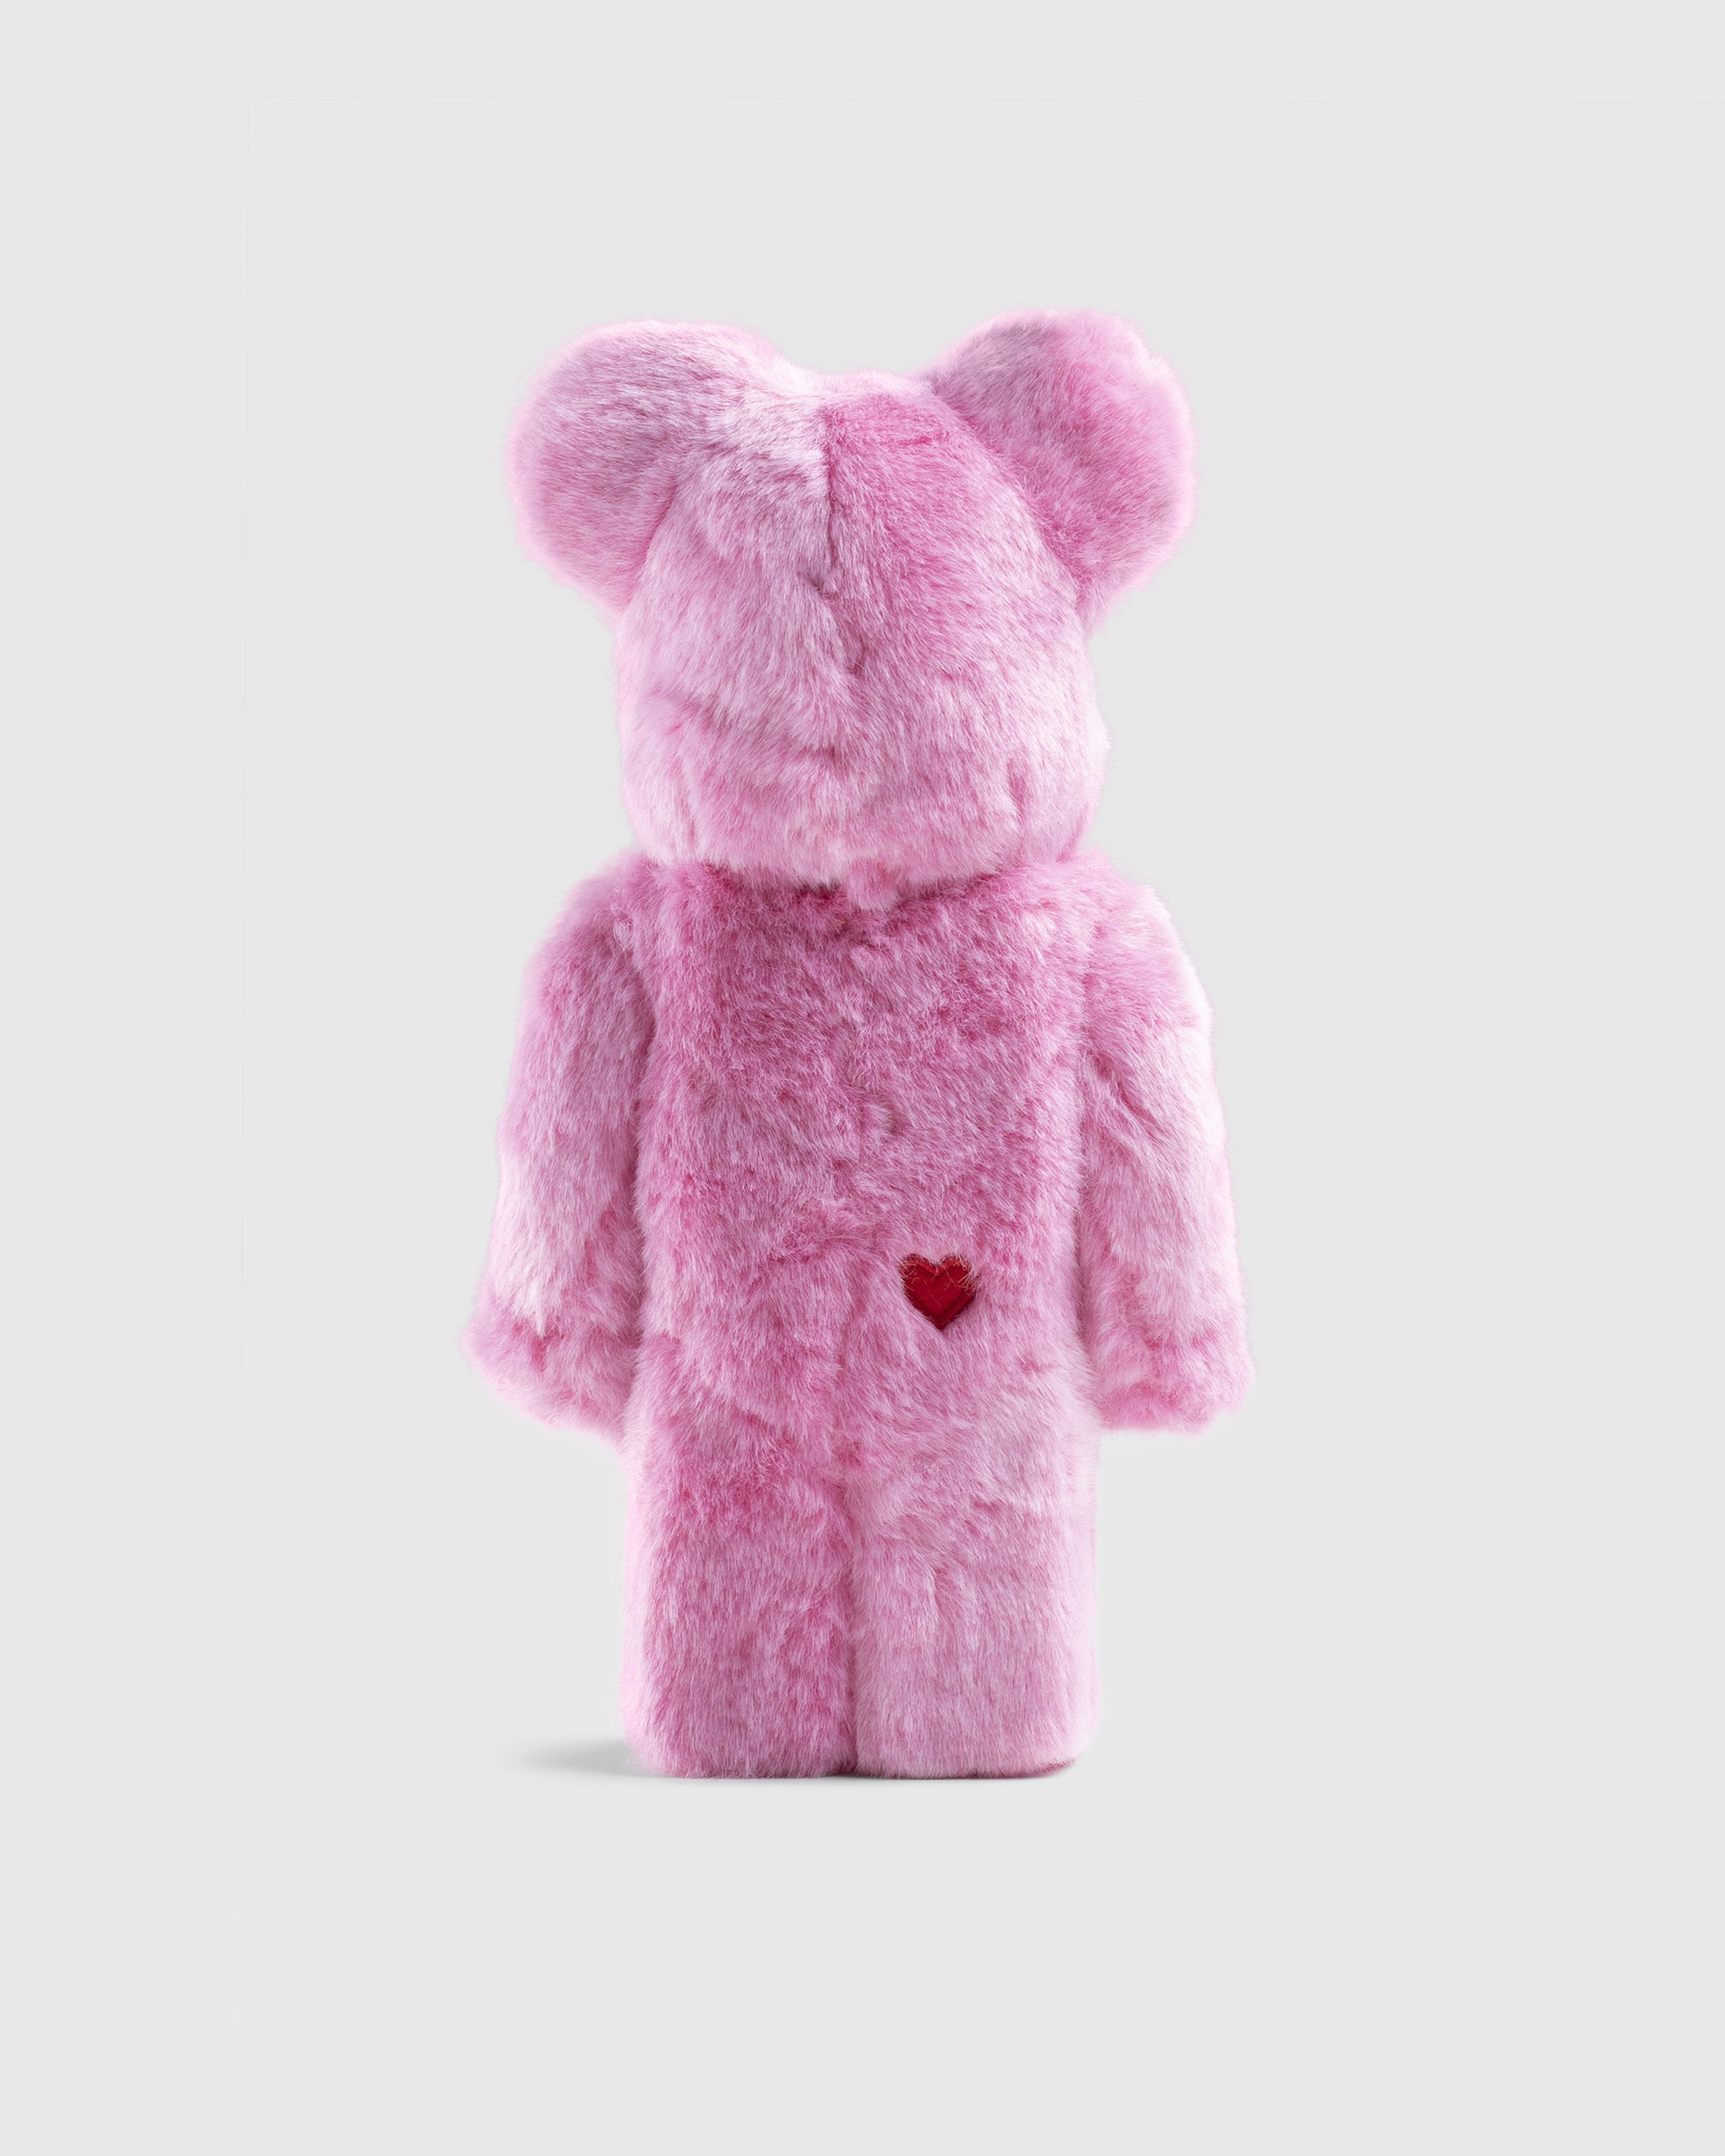 Medicom - Be@rbrick Cheer Bear Costume Version 1000% Pink - Lifestyle - Pink - Image 2